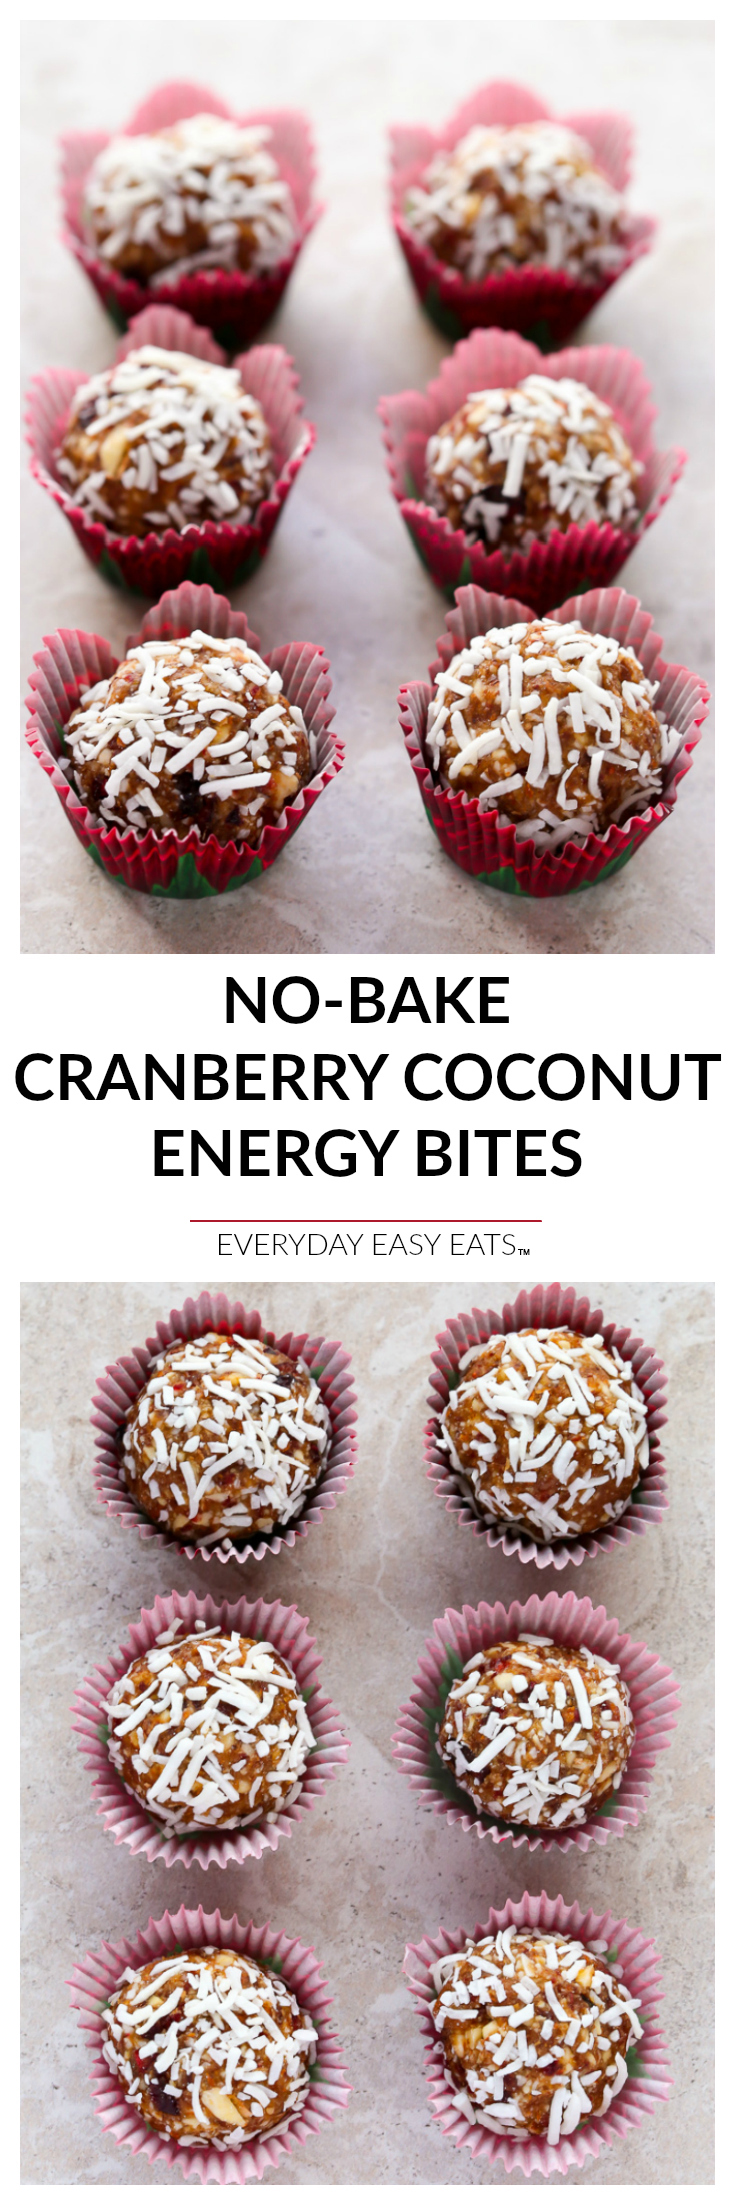 5-ingredient, No-bake Coconut Cranberry Energy Bites | Recipe at EverydayEasyEats.com